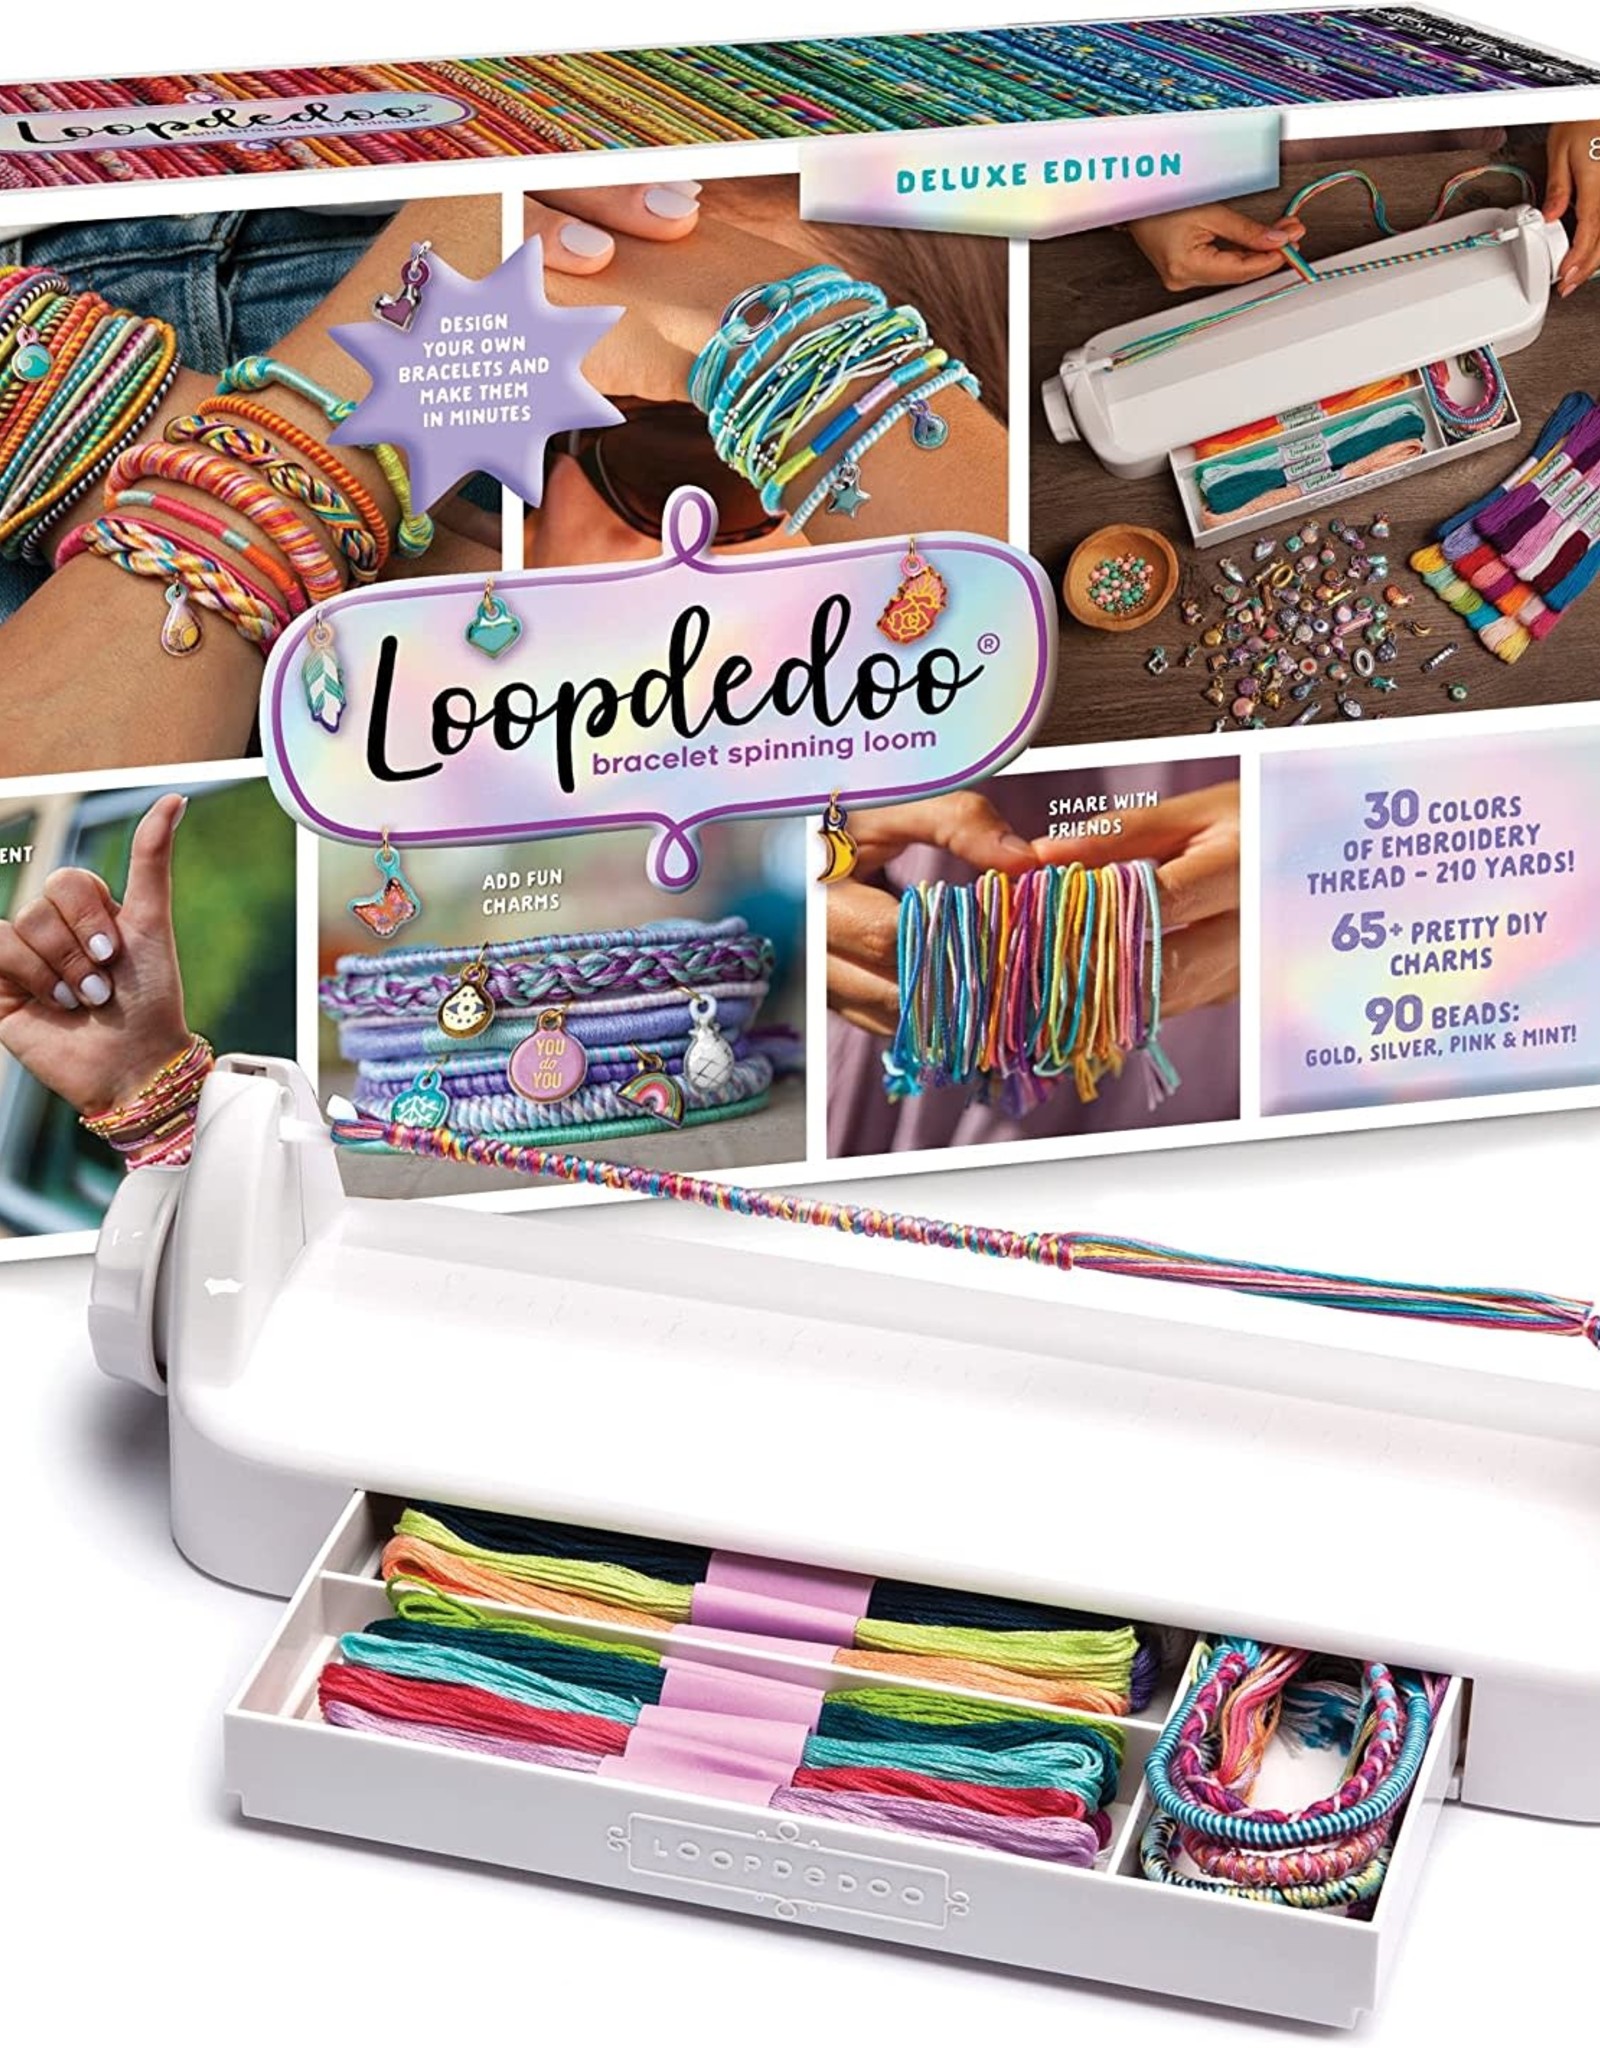 Loopdedoo Spinning Loom Friendship Bracelet Maker Kit DIY